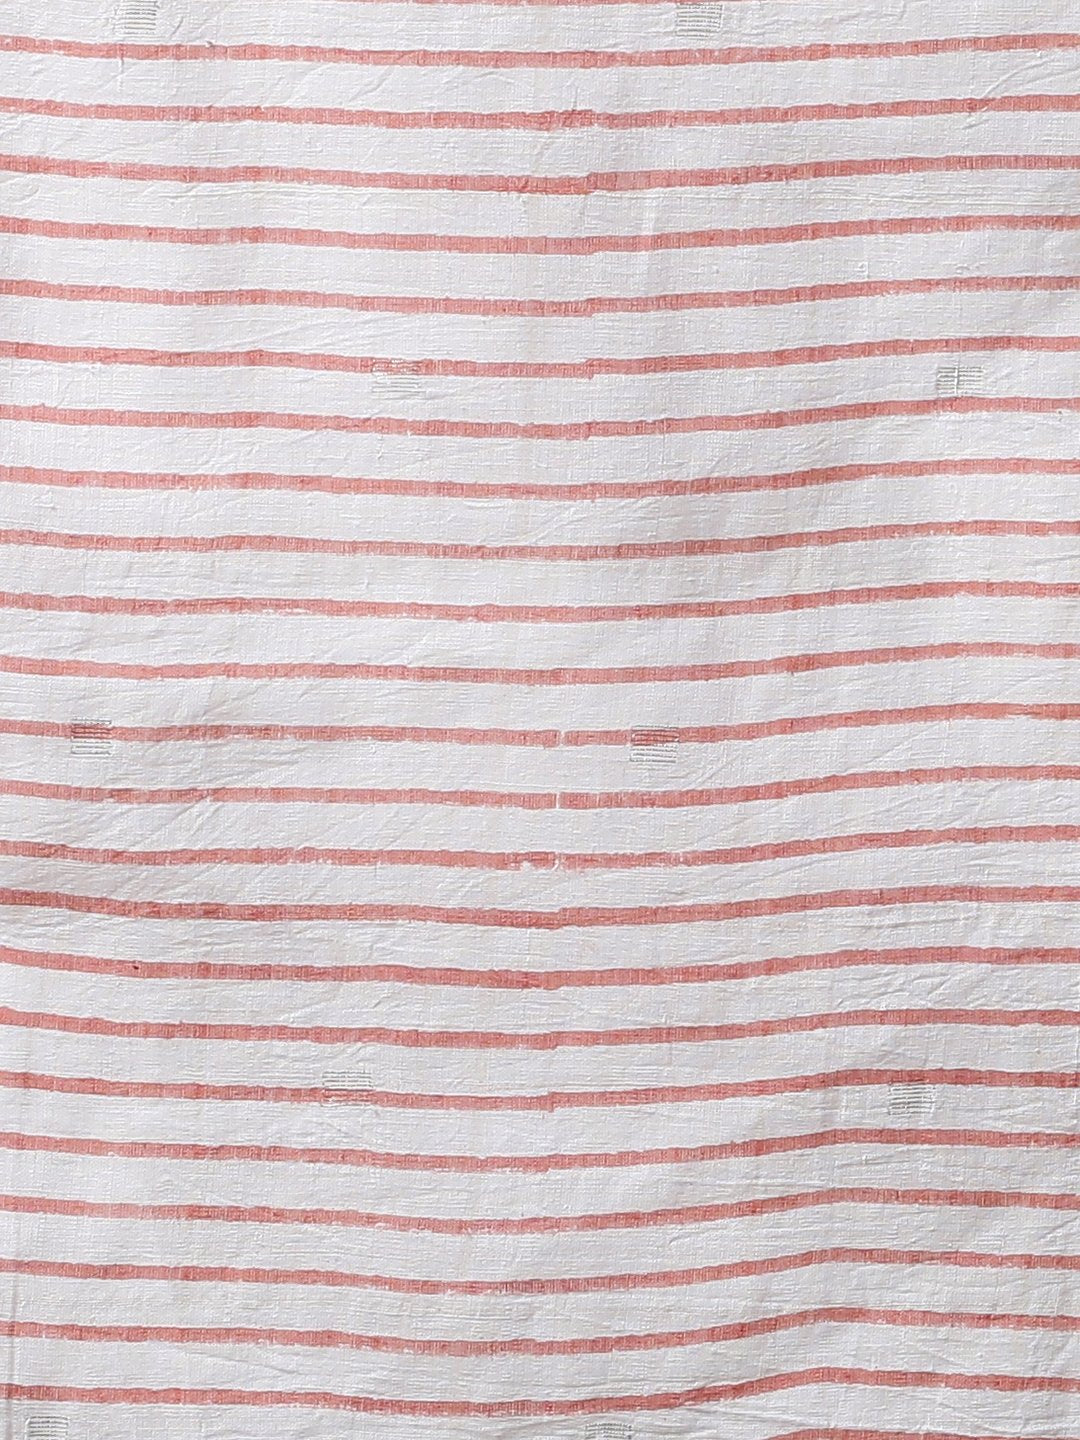 White pink cotton handblock print saree